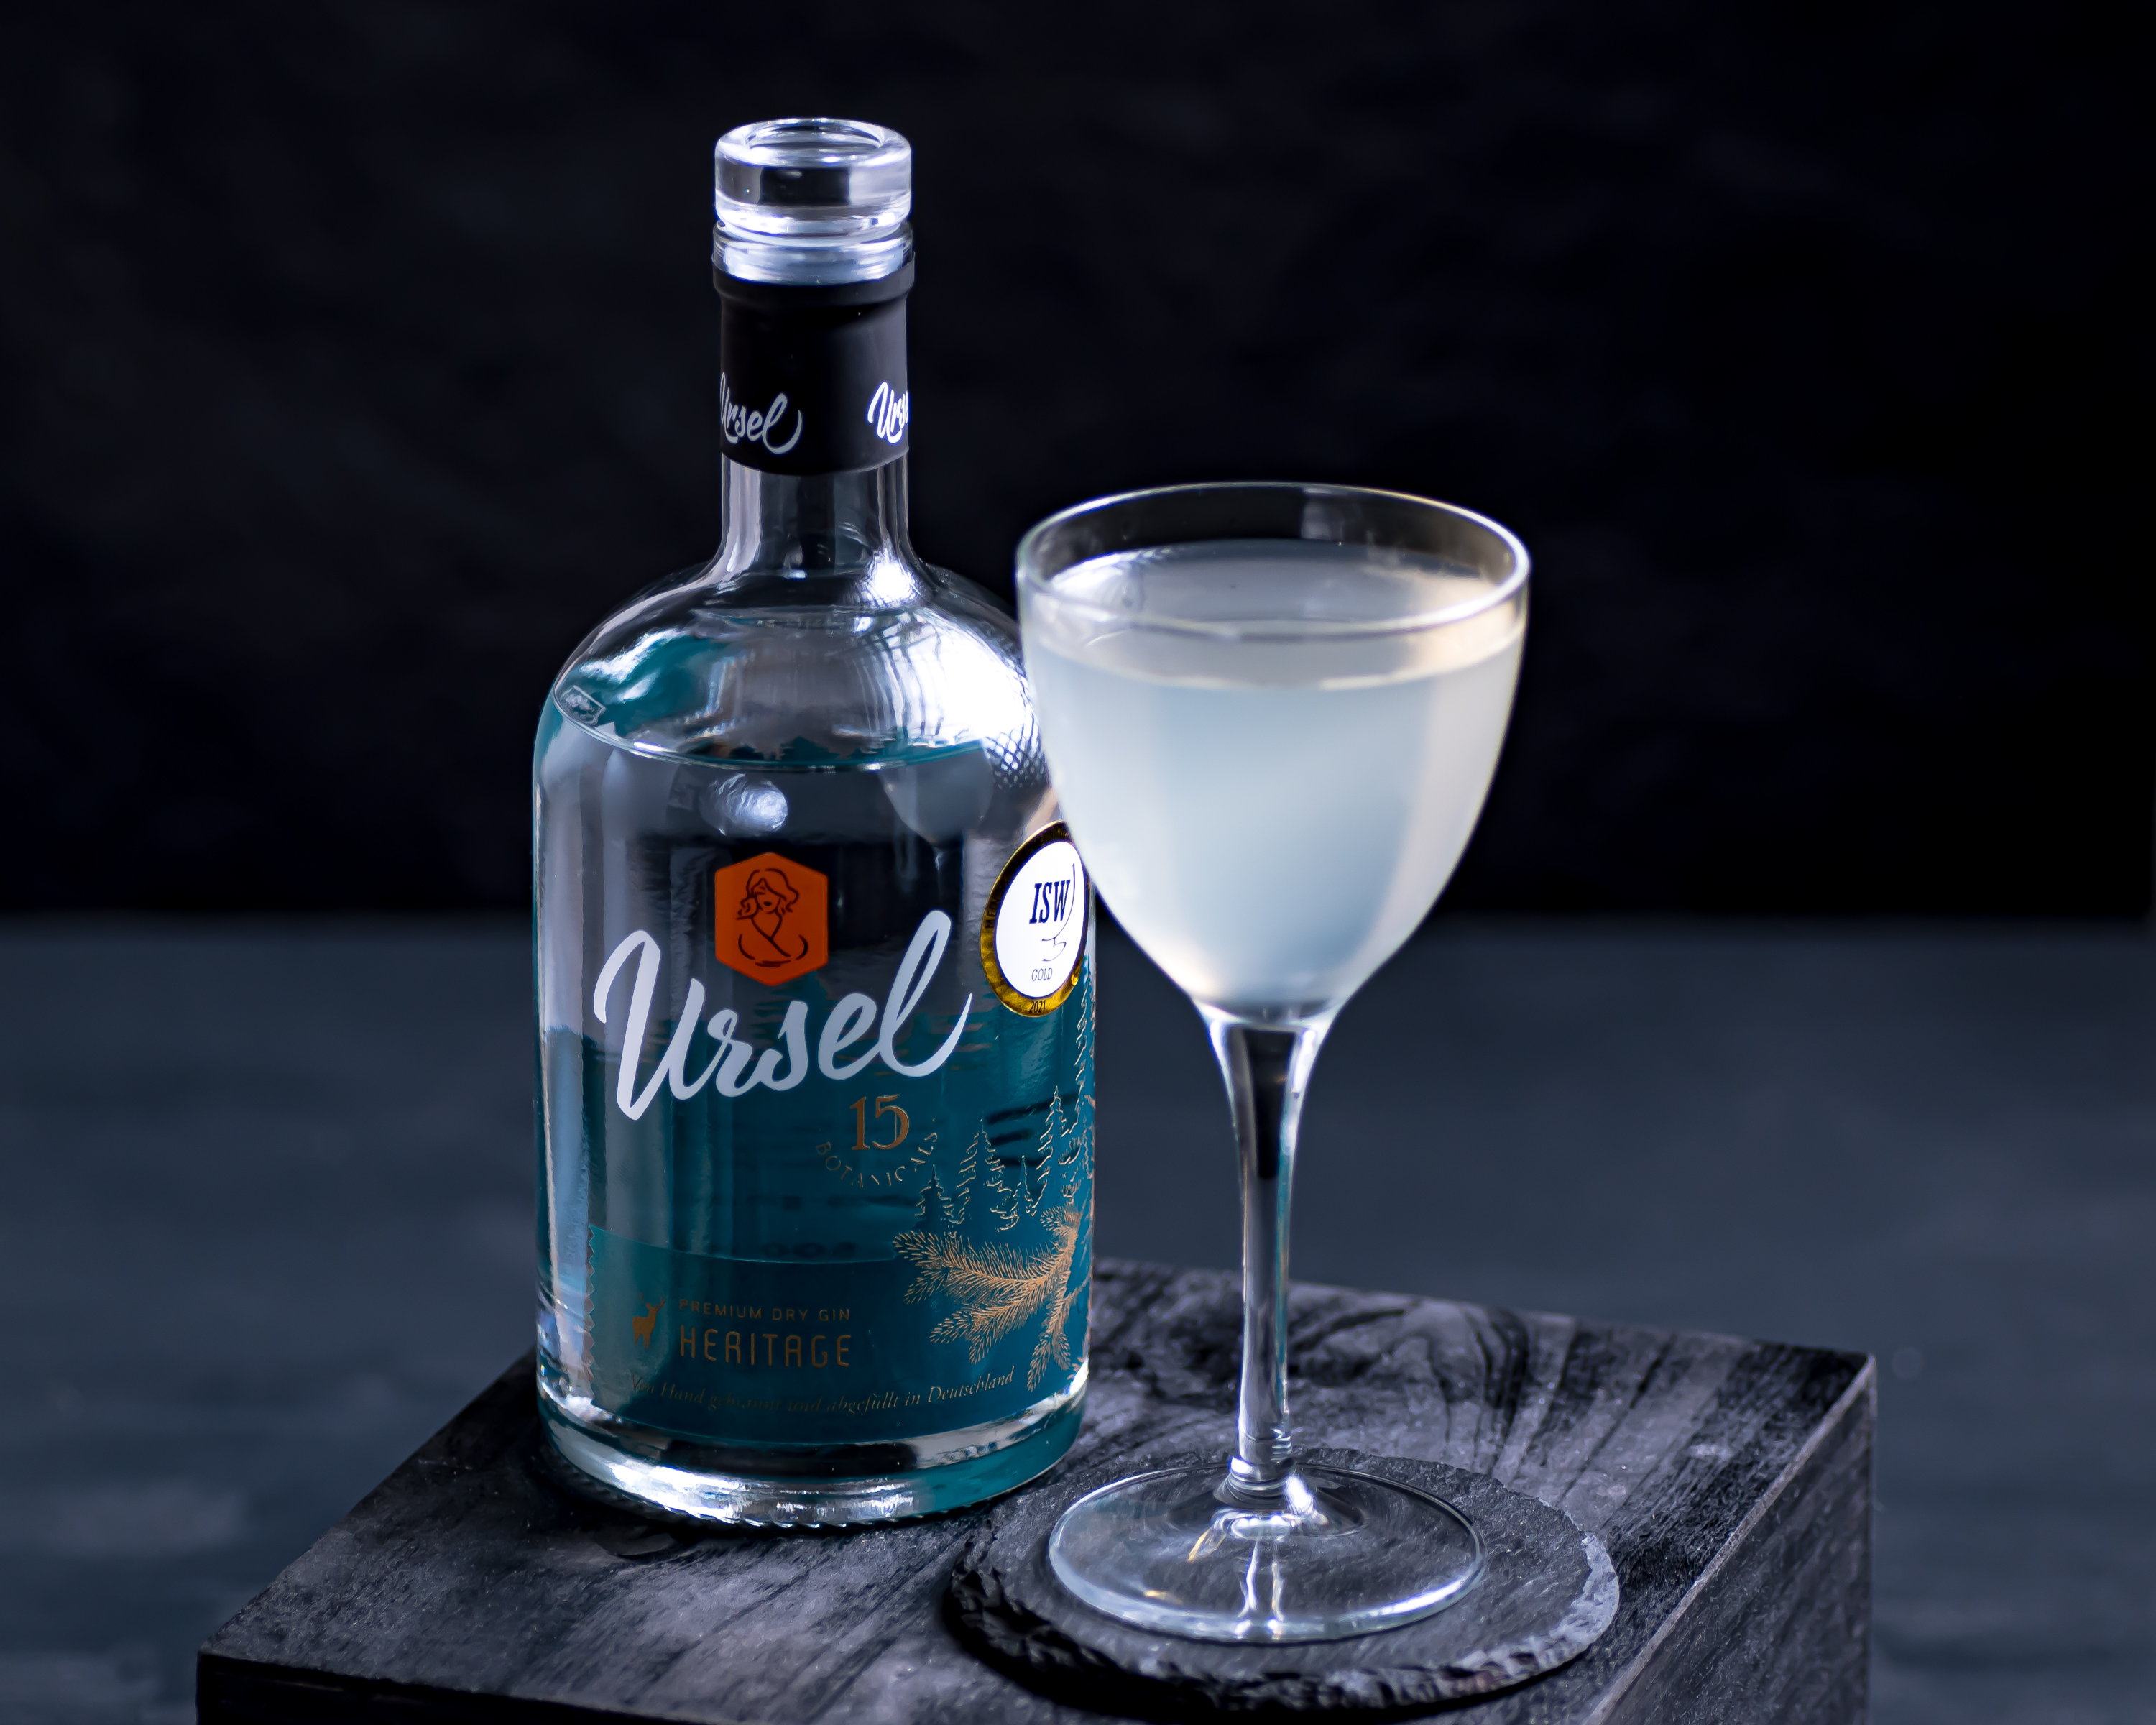 Ursel Heritage Gin dans un cocktail Martini.